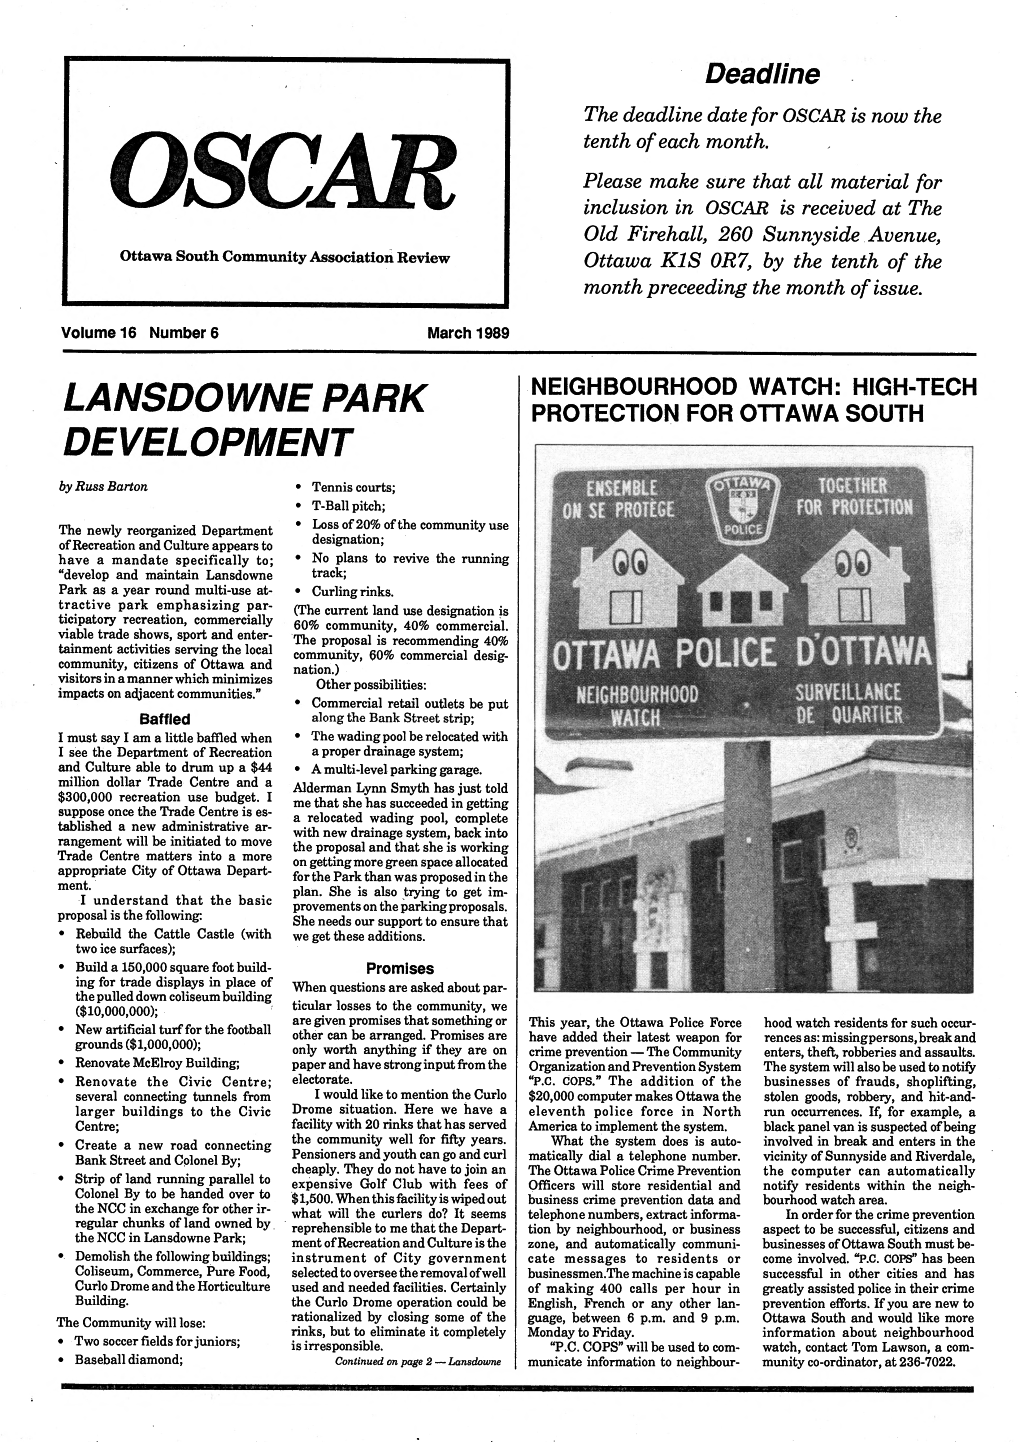 Lansdowne Park Development